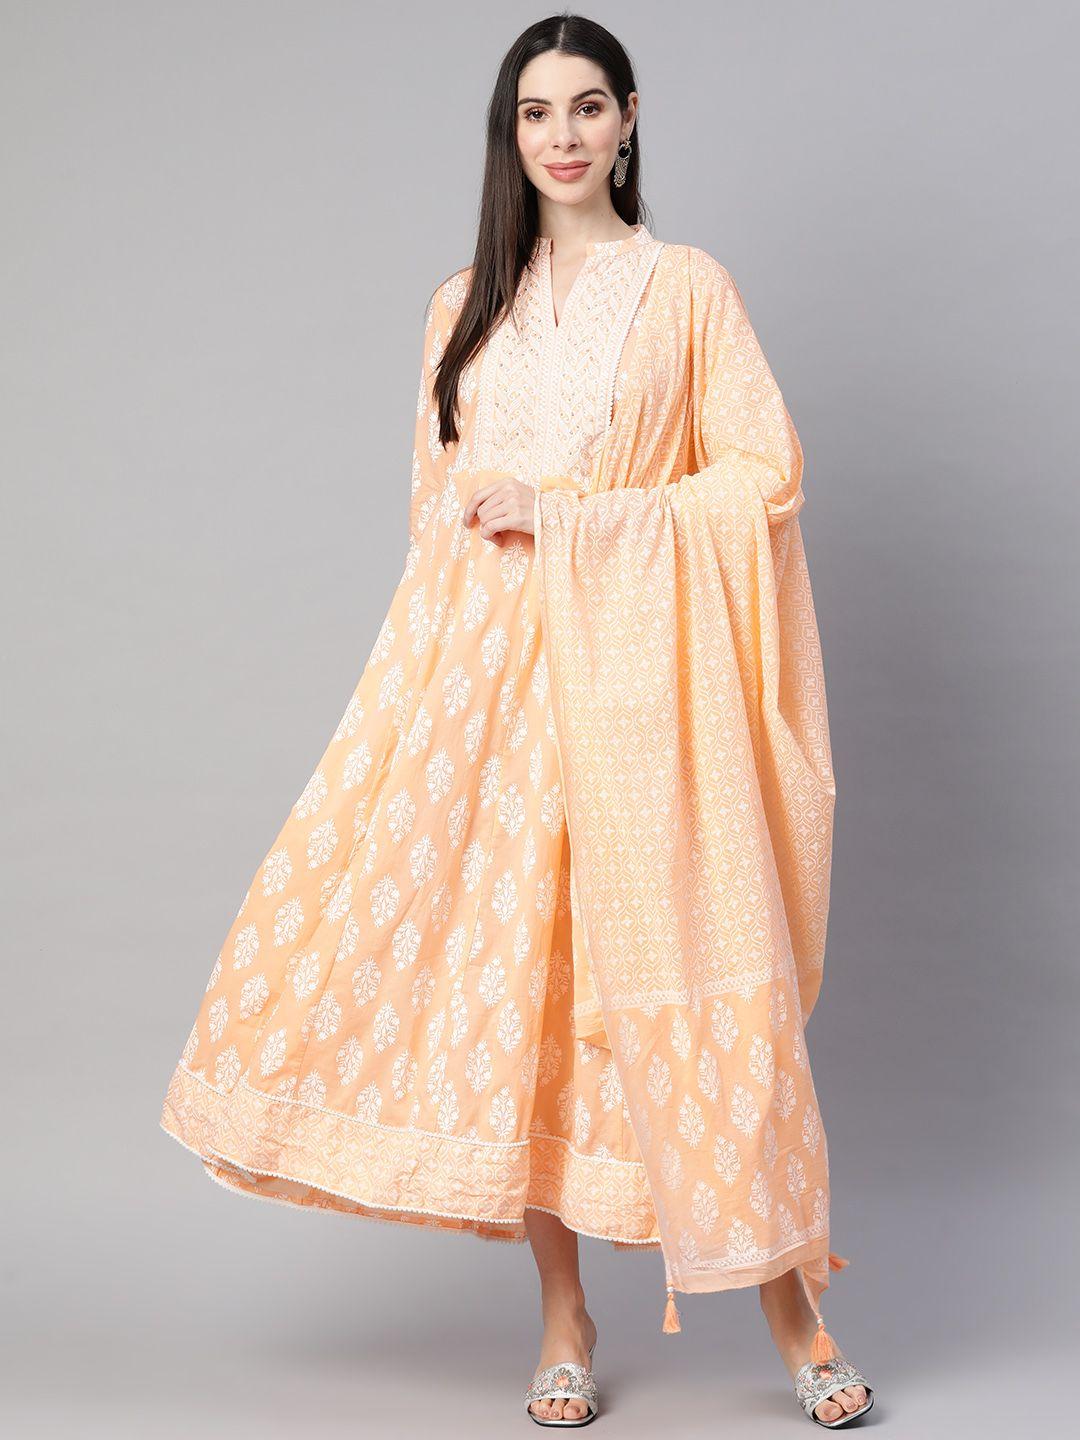 Readiprint Fashions Women Peach-Coloured & White Pure Cotton Ethnic Motifs Print Gown